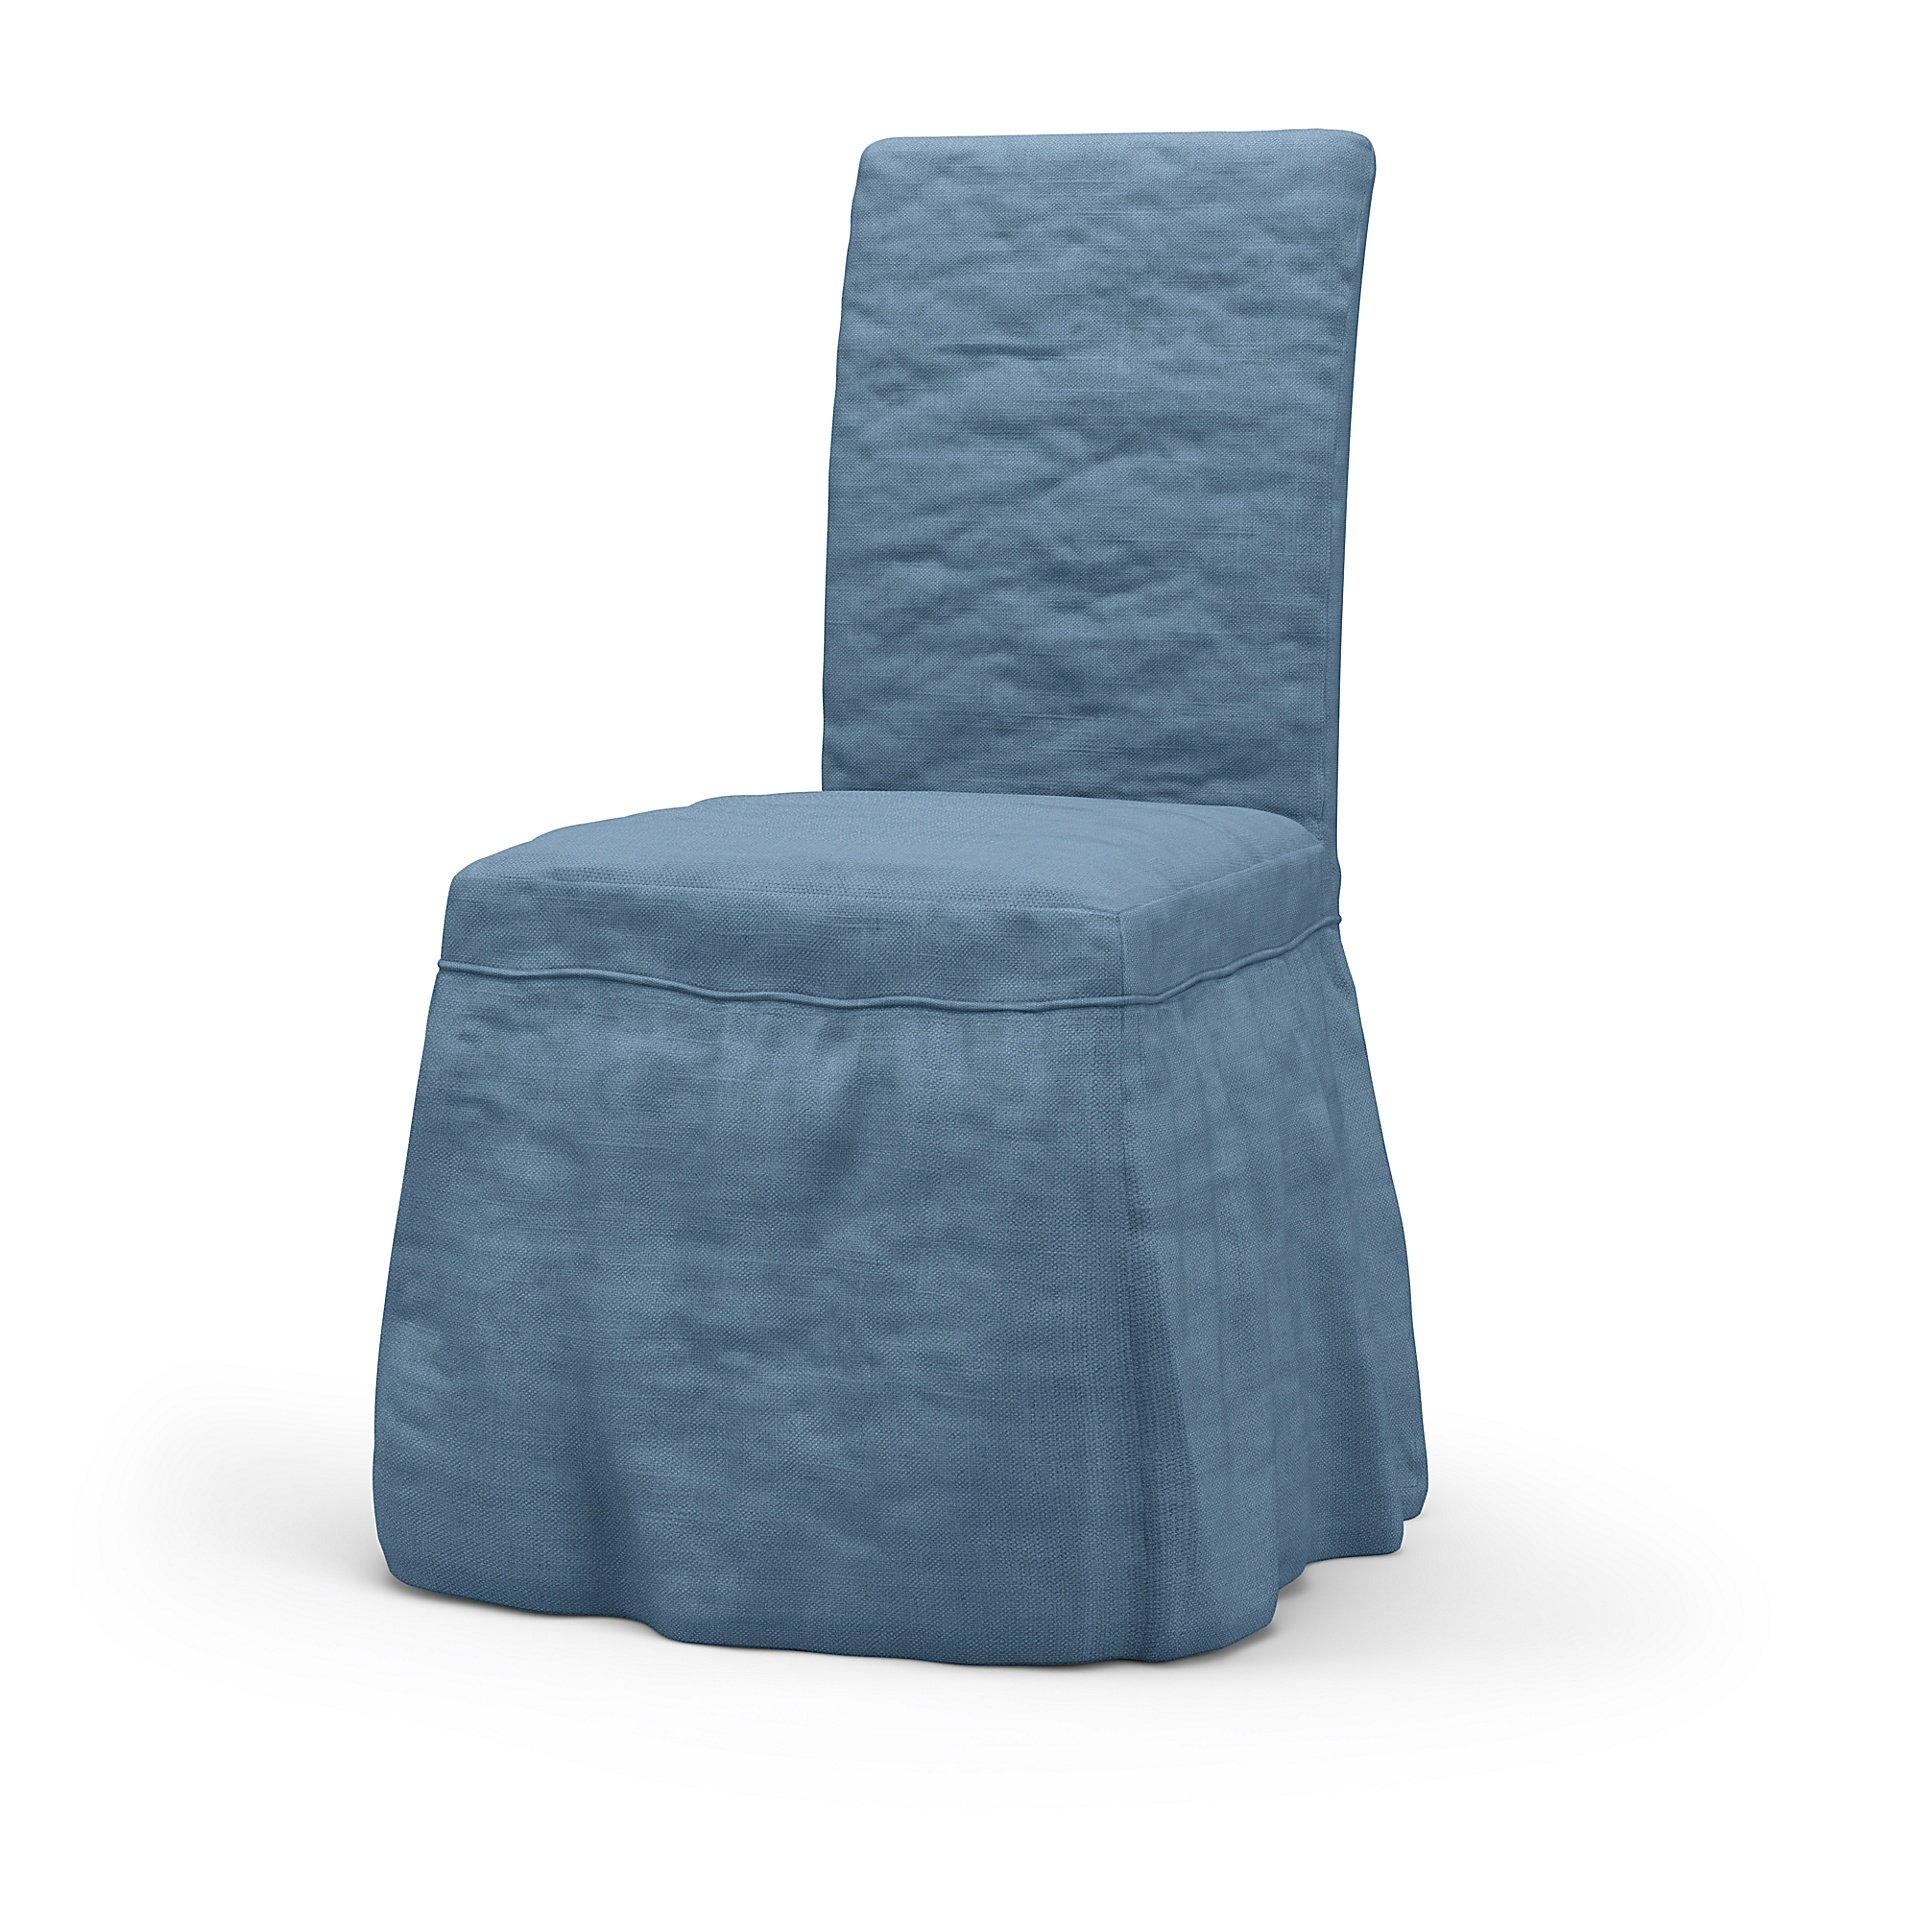 IKEA - Henriksdal Dining Chair Cover Long skirt with Ruffles (Standard model), Vintage Blue, Linen -